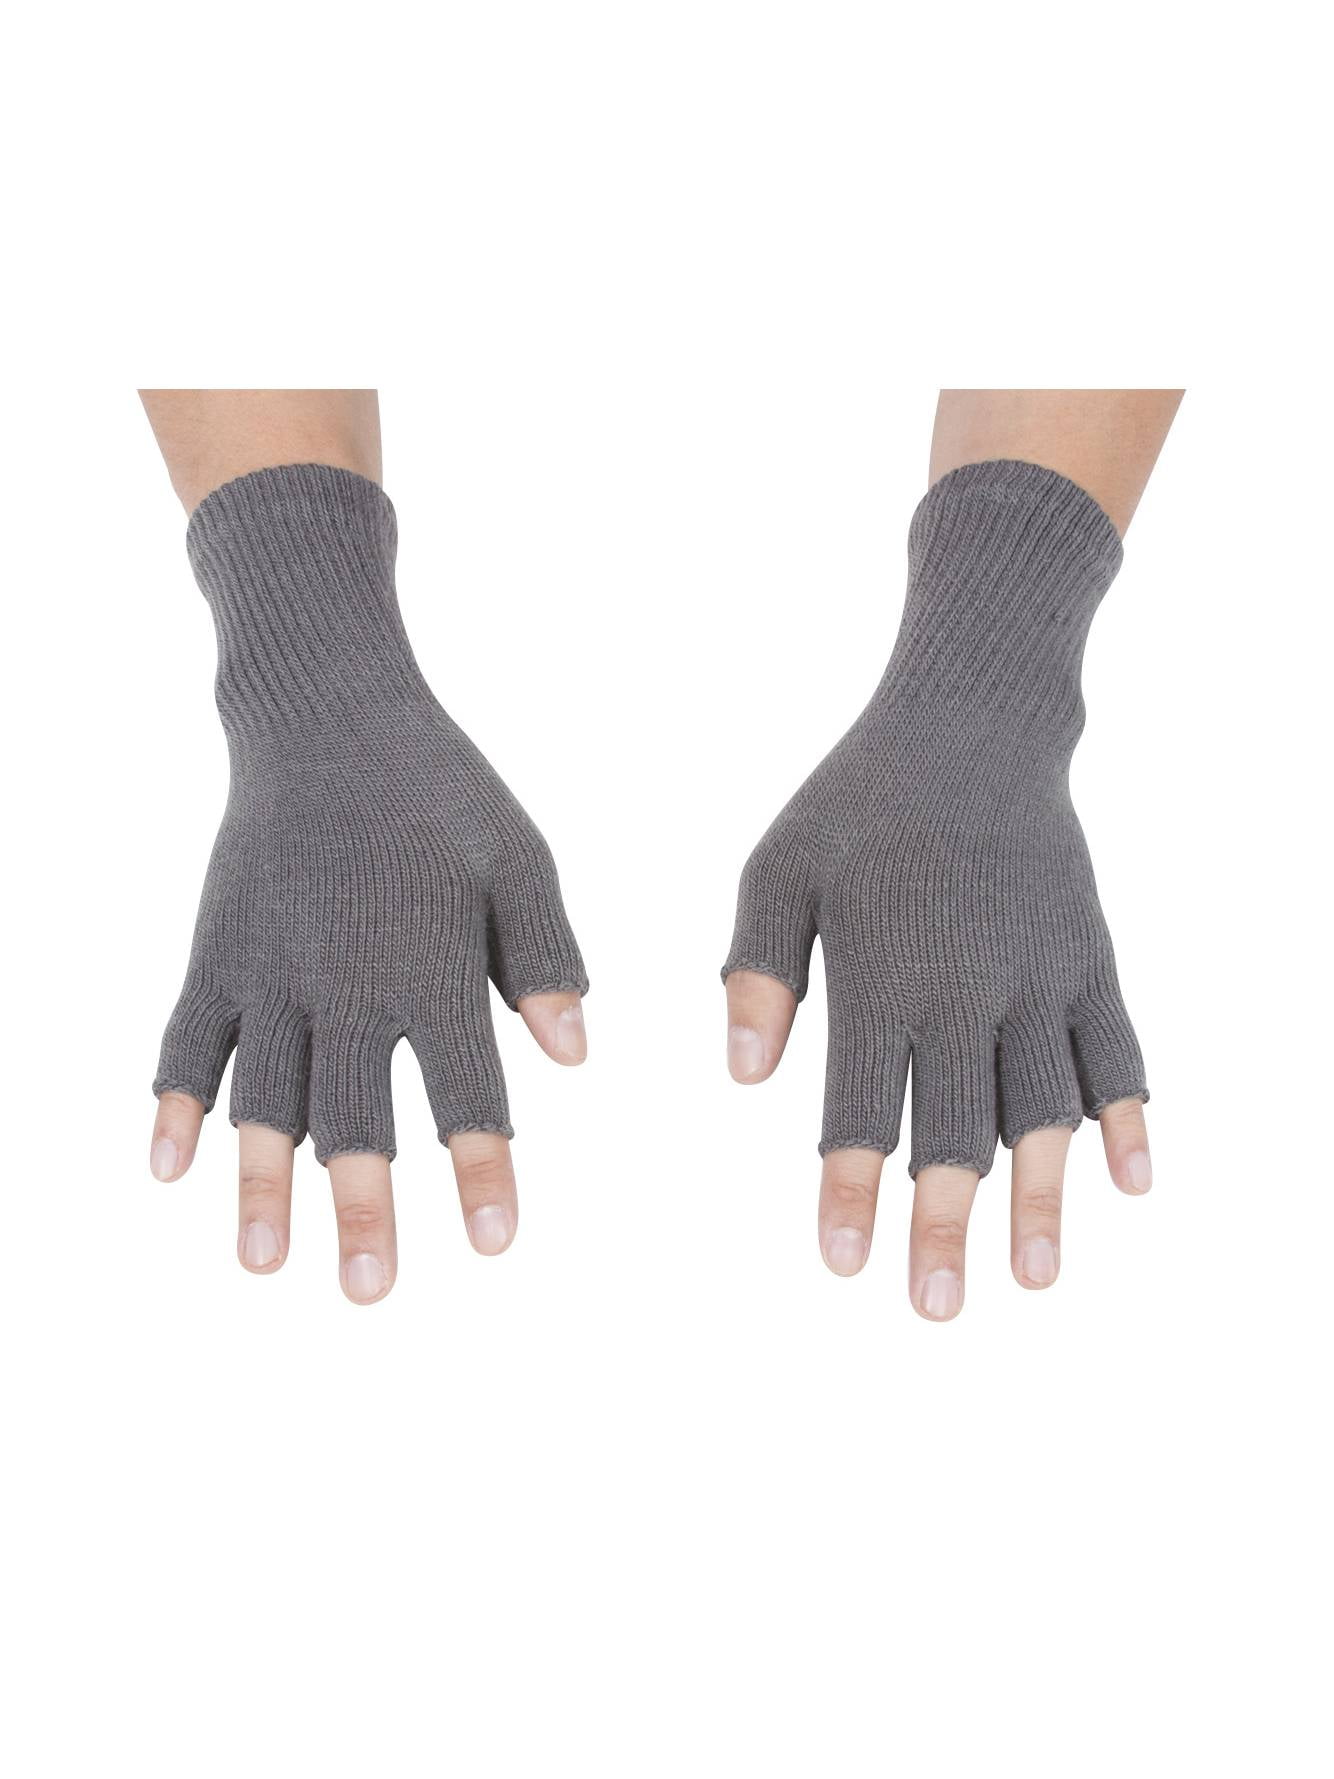 Stretchy Gloves, Finger Threads Gravity Unisex Navy Fingerless Knit Half Warm Blue